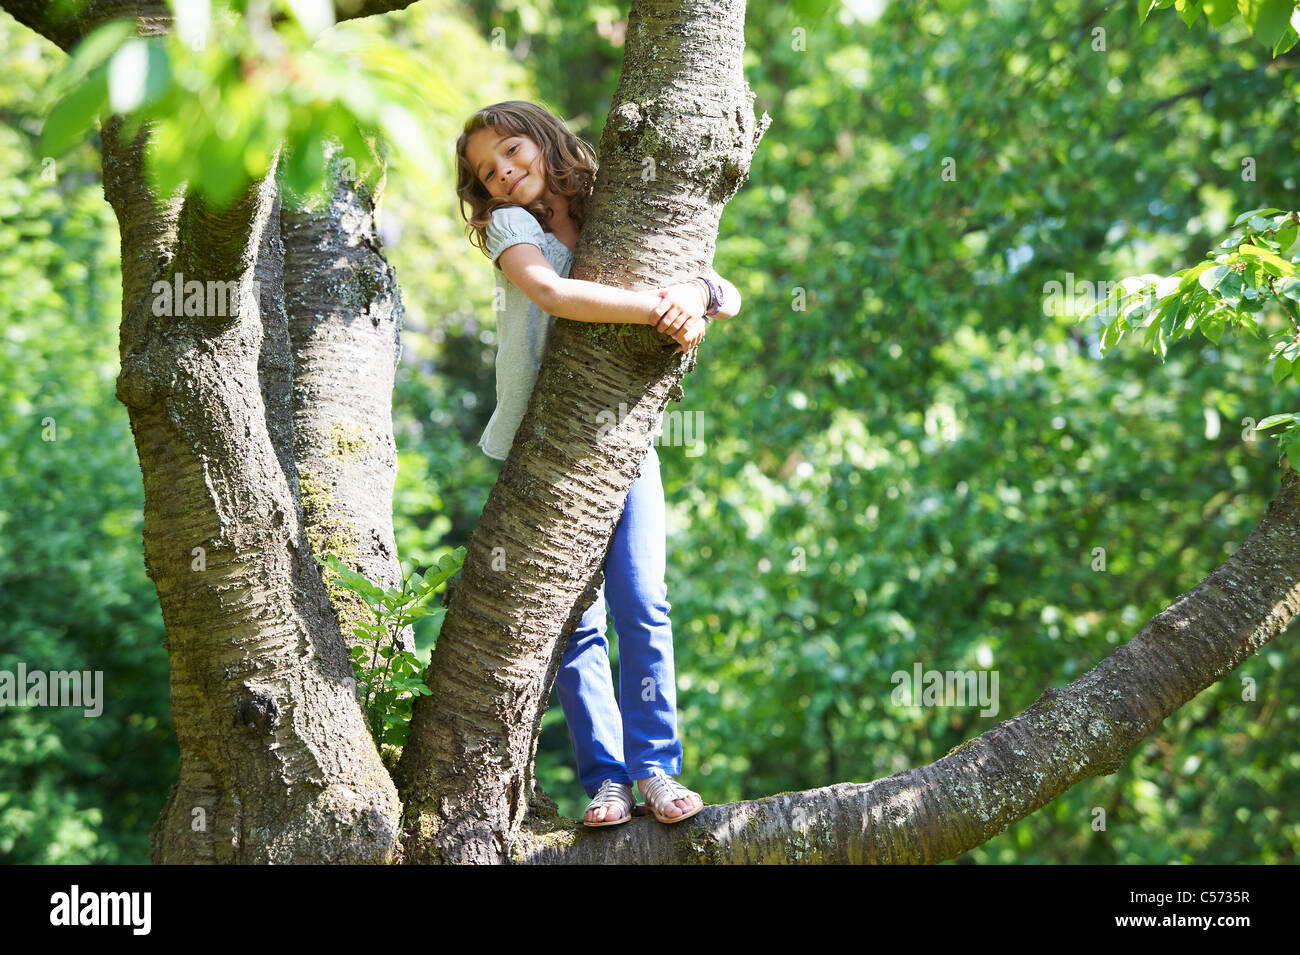 Smiling girl climbing tree outdoors Stock Photo